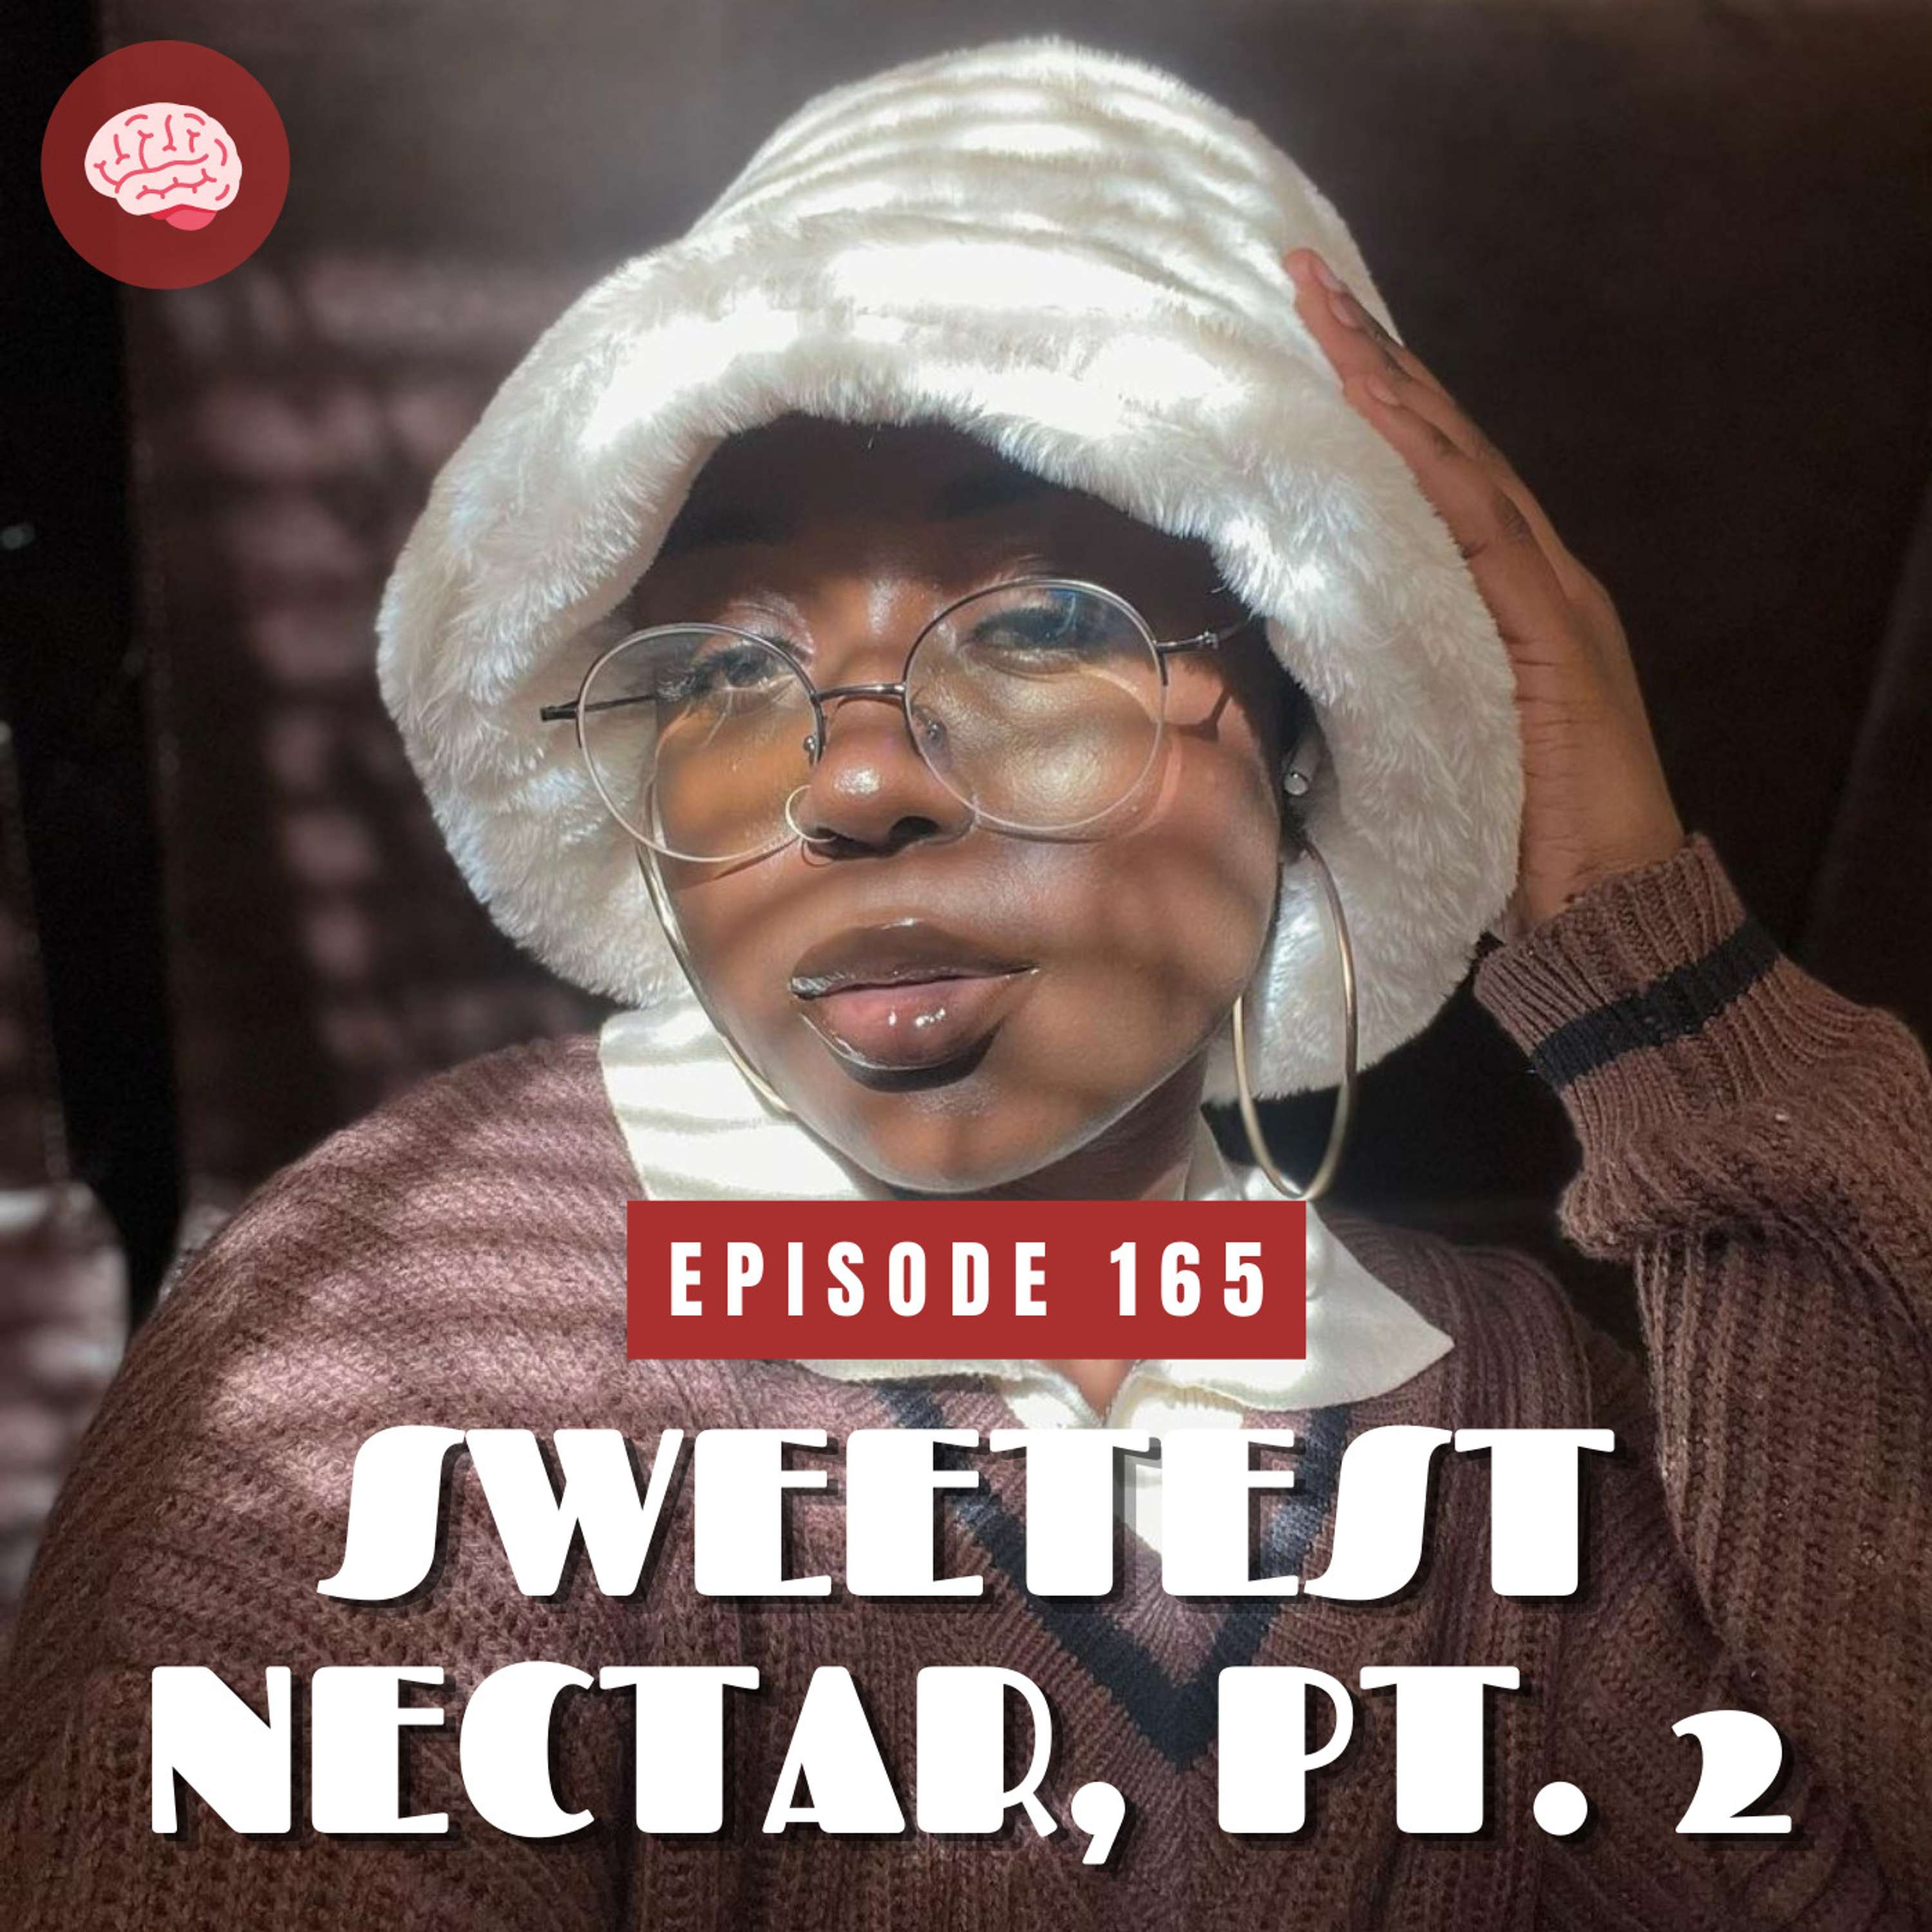 Sweetest Nectar, Pt. 2 (w/ Diakha Thiam)